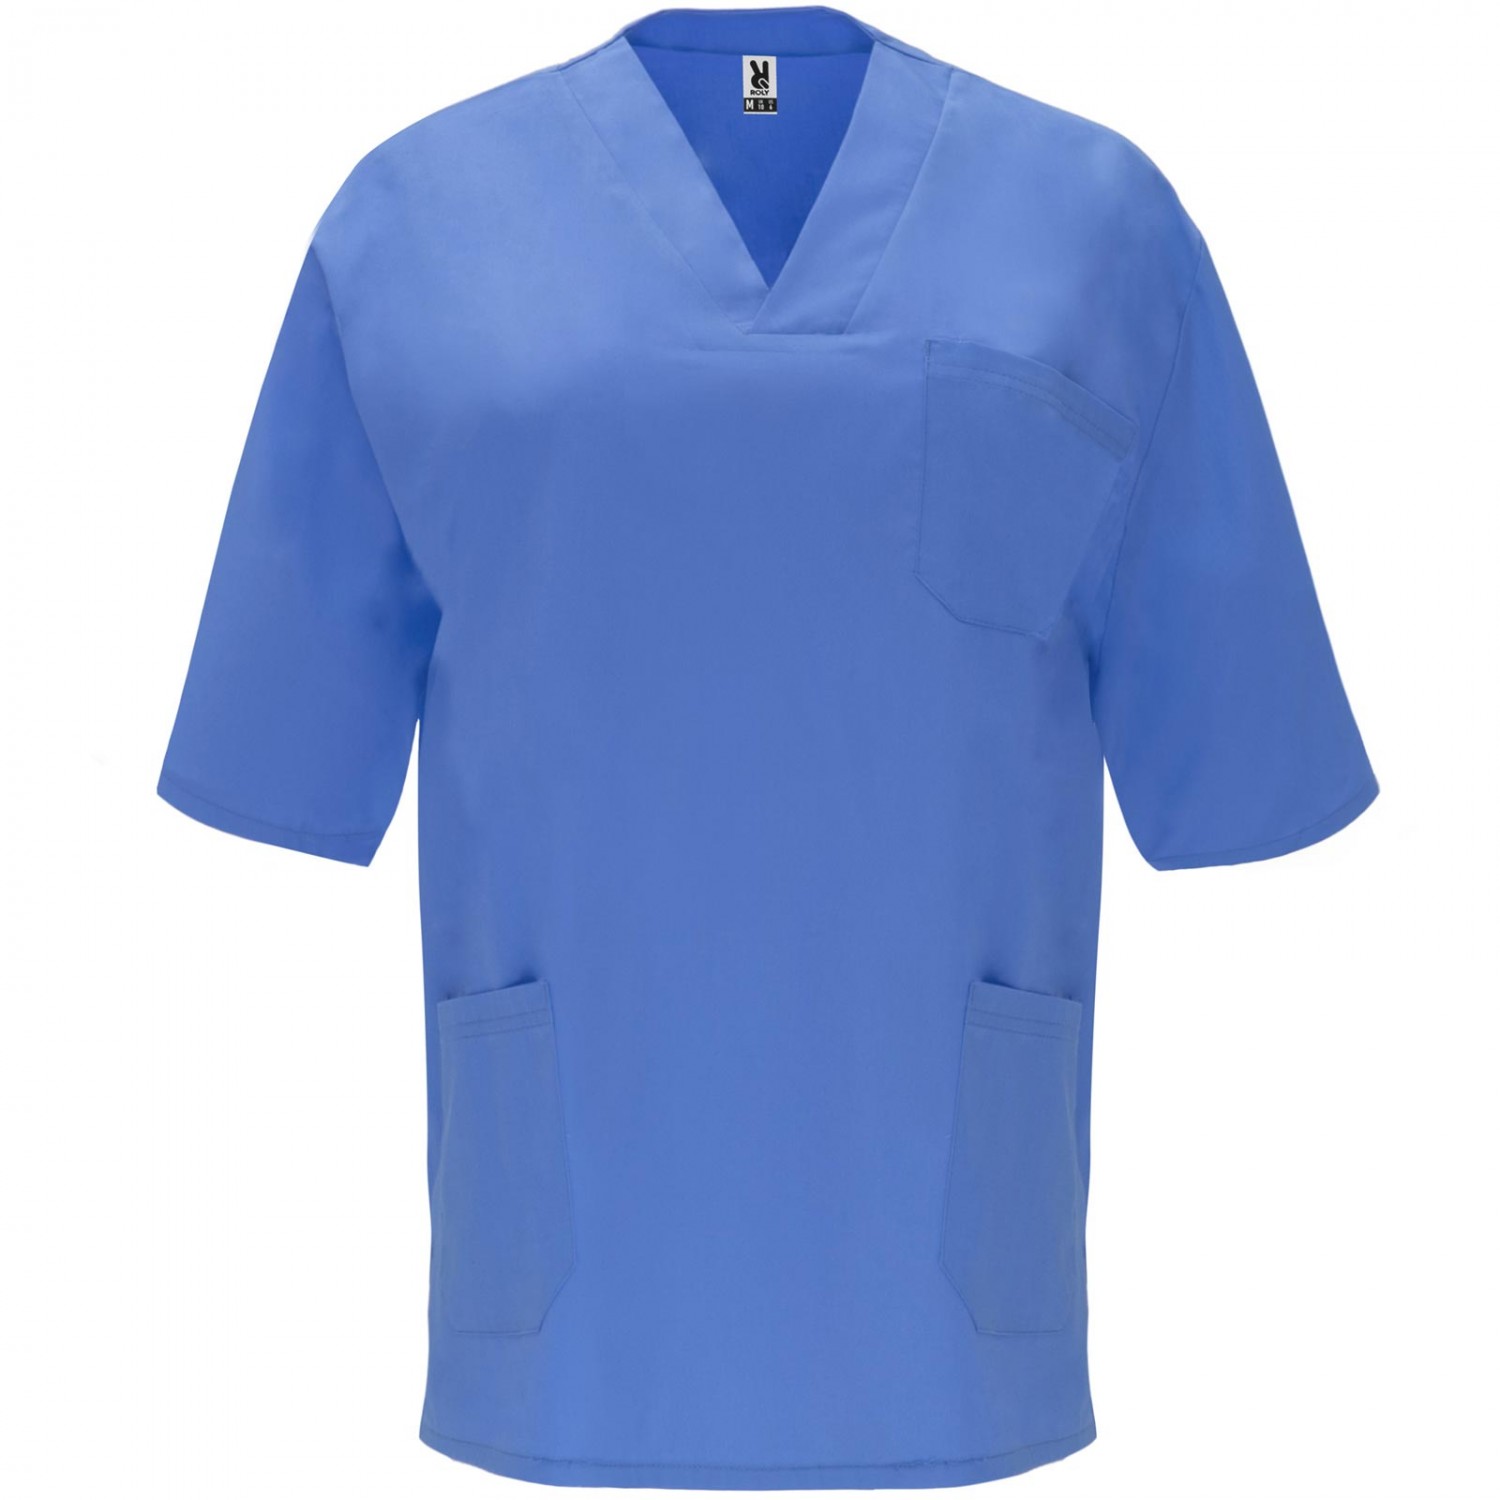 Schlupfkasack Medizin Pflege Unisex Hemd Jacke (Farbe: OP-blau Größe: 3XL)